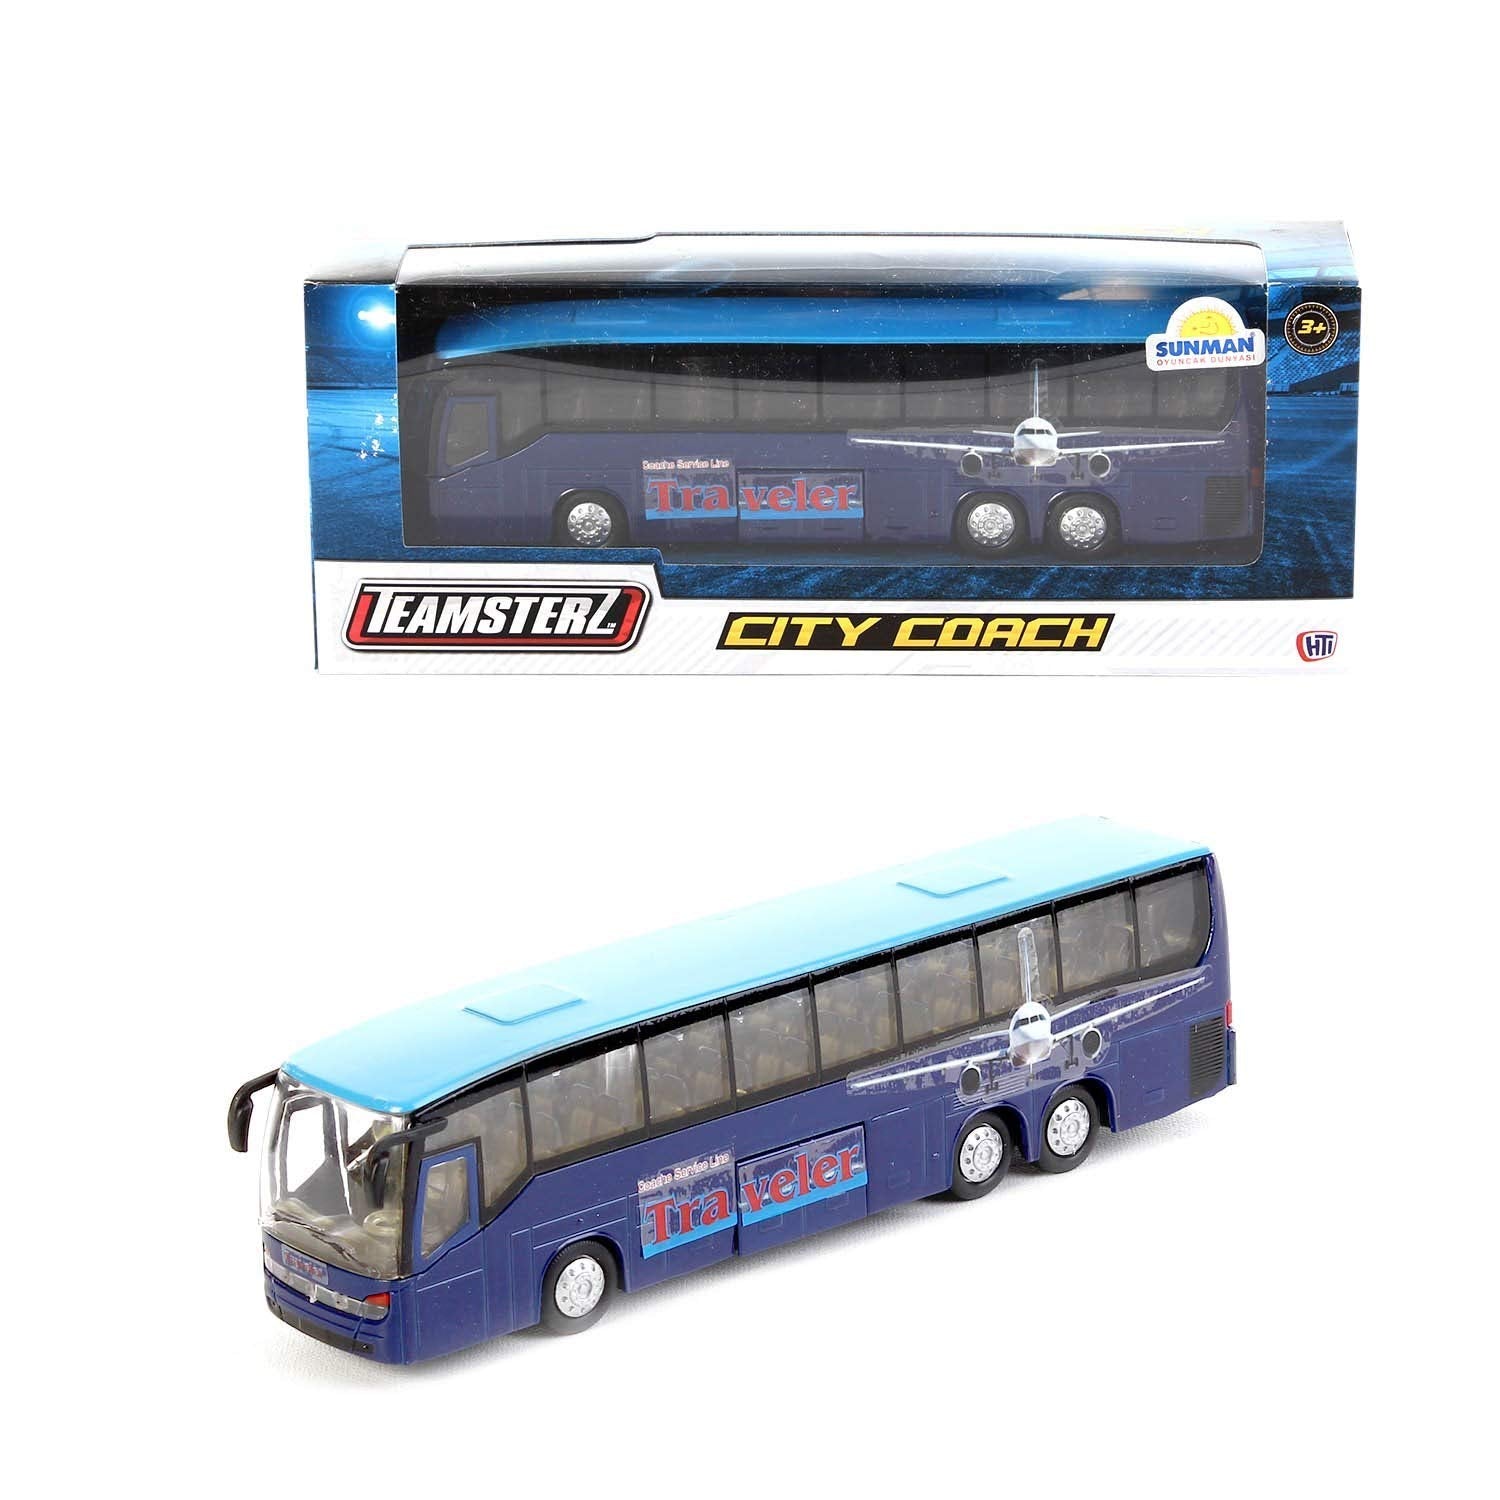 Teamsterz Die-Cast City Coach Traveller Model